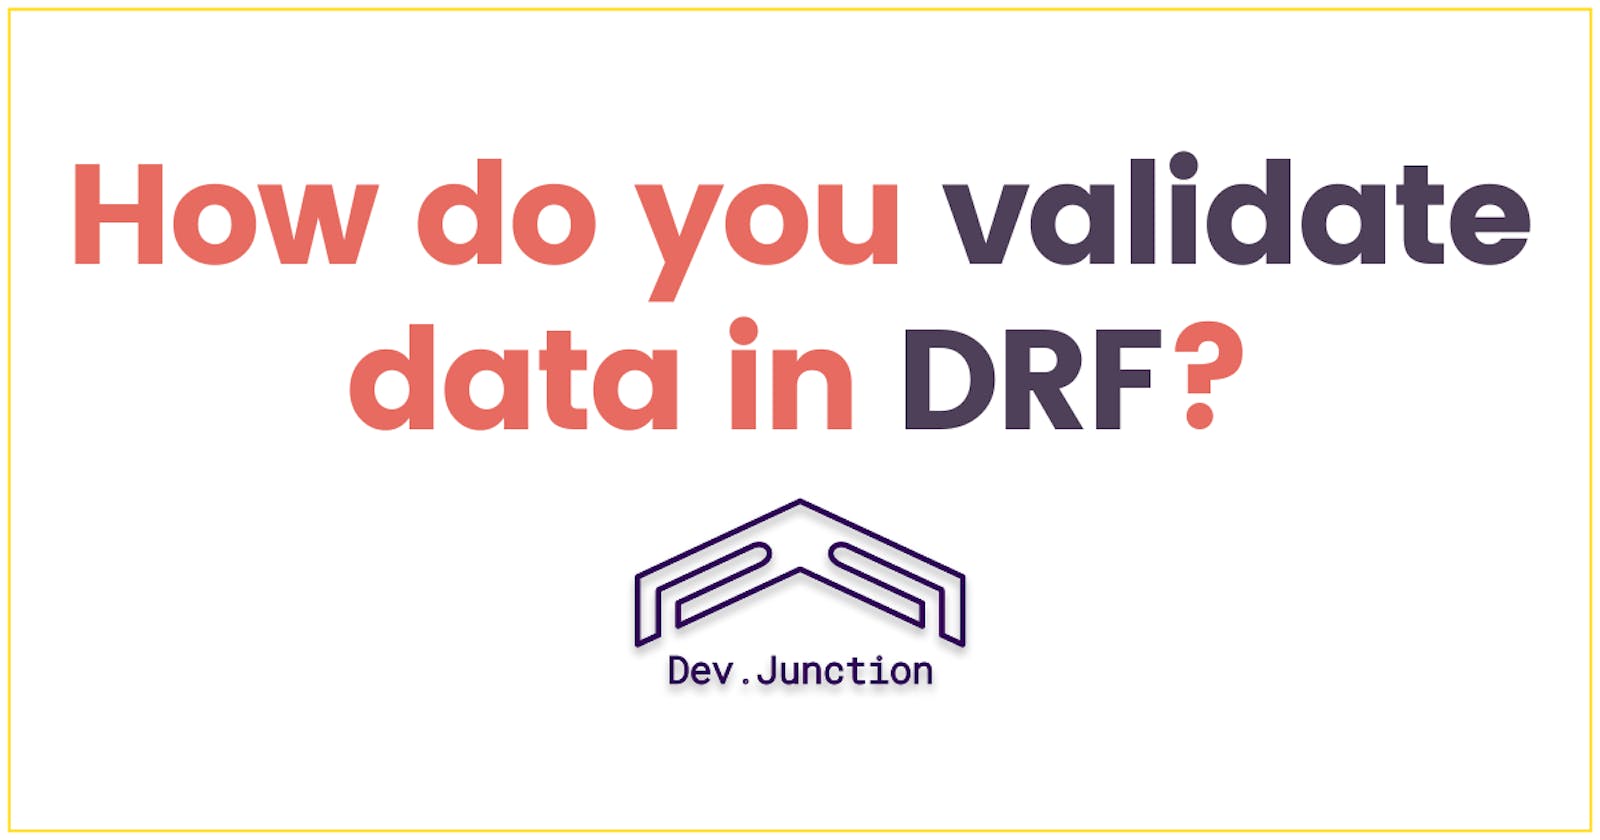 How to perform data validation in Django Rest Framework?